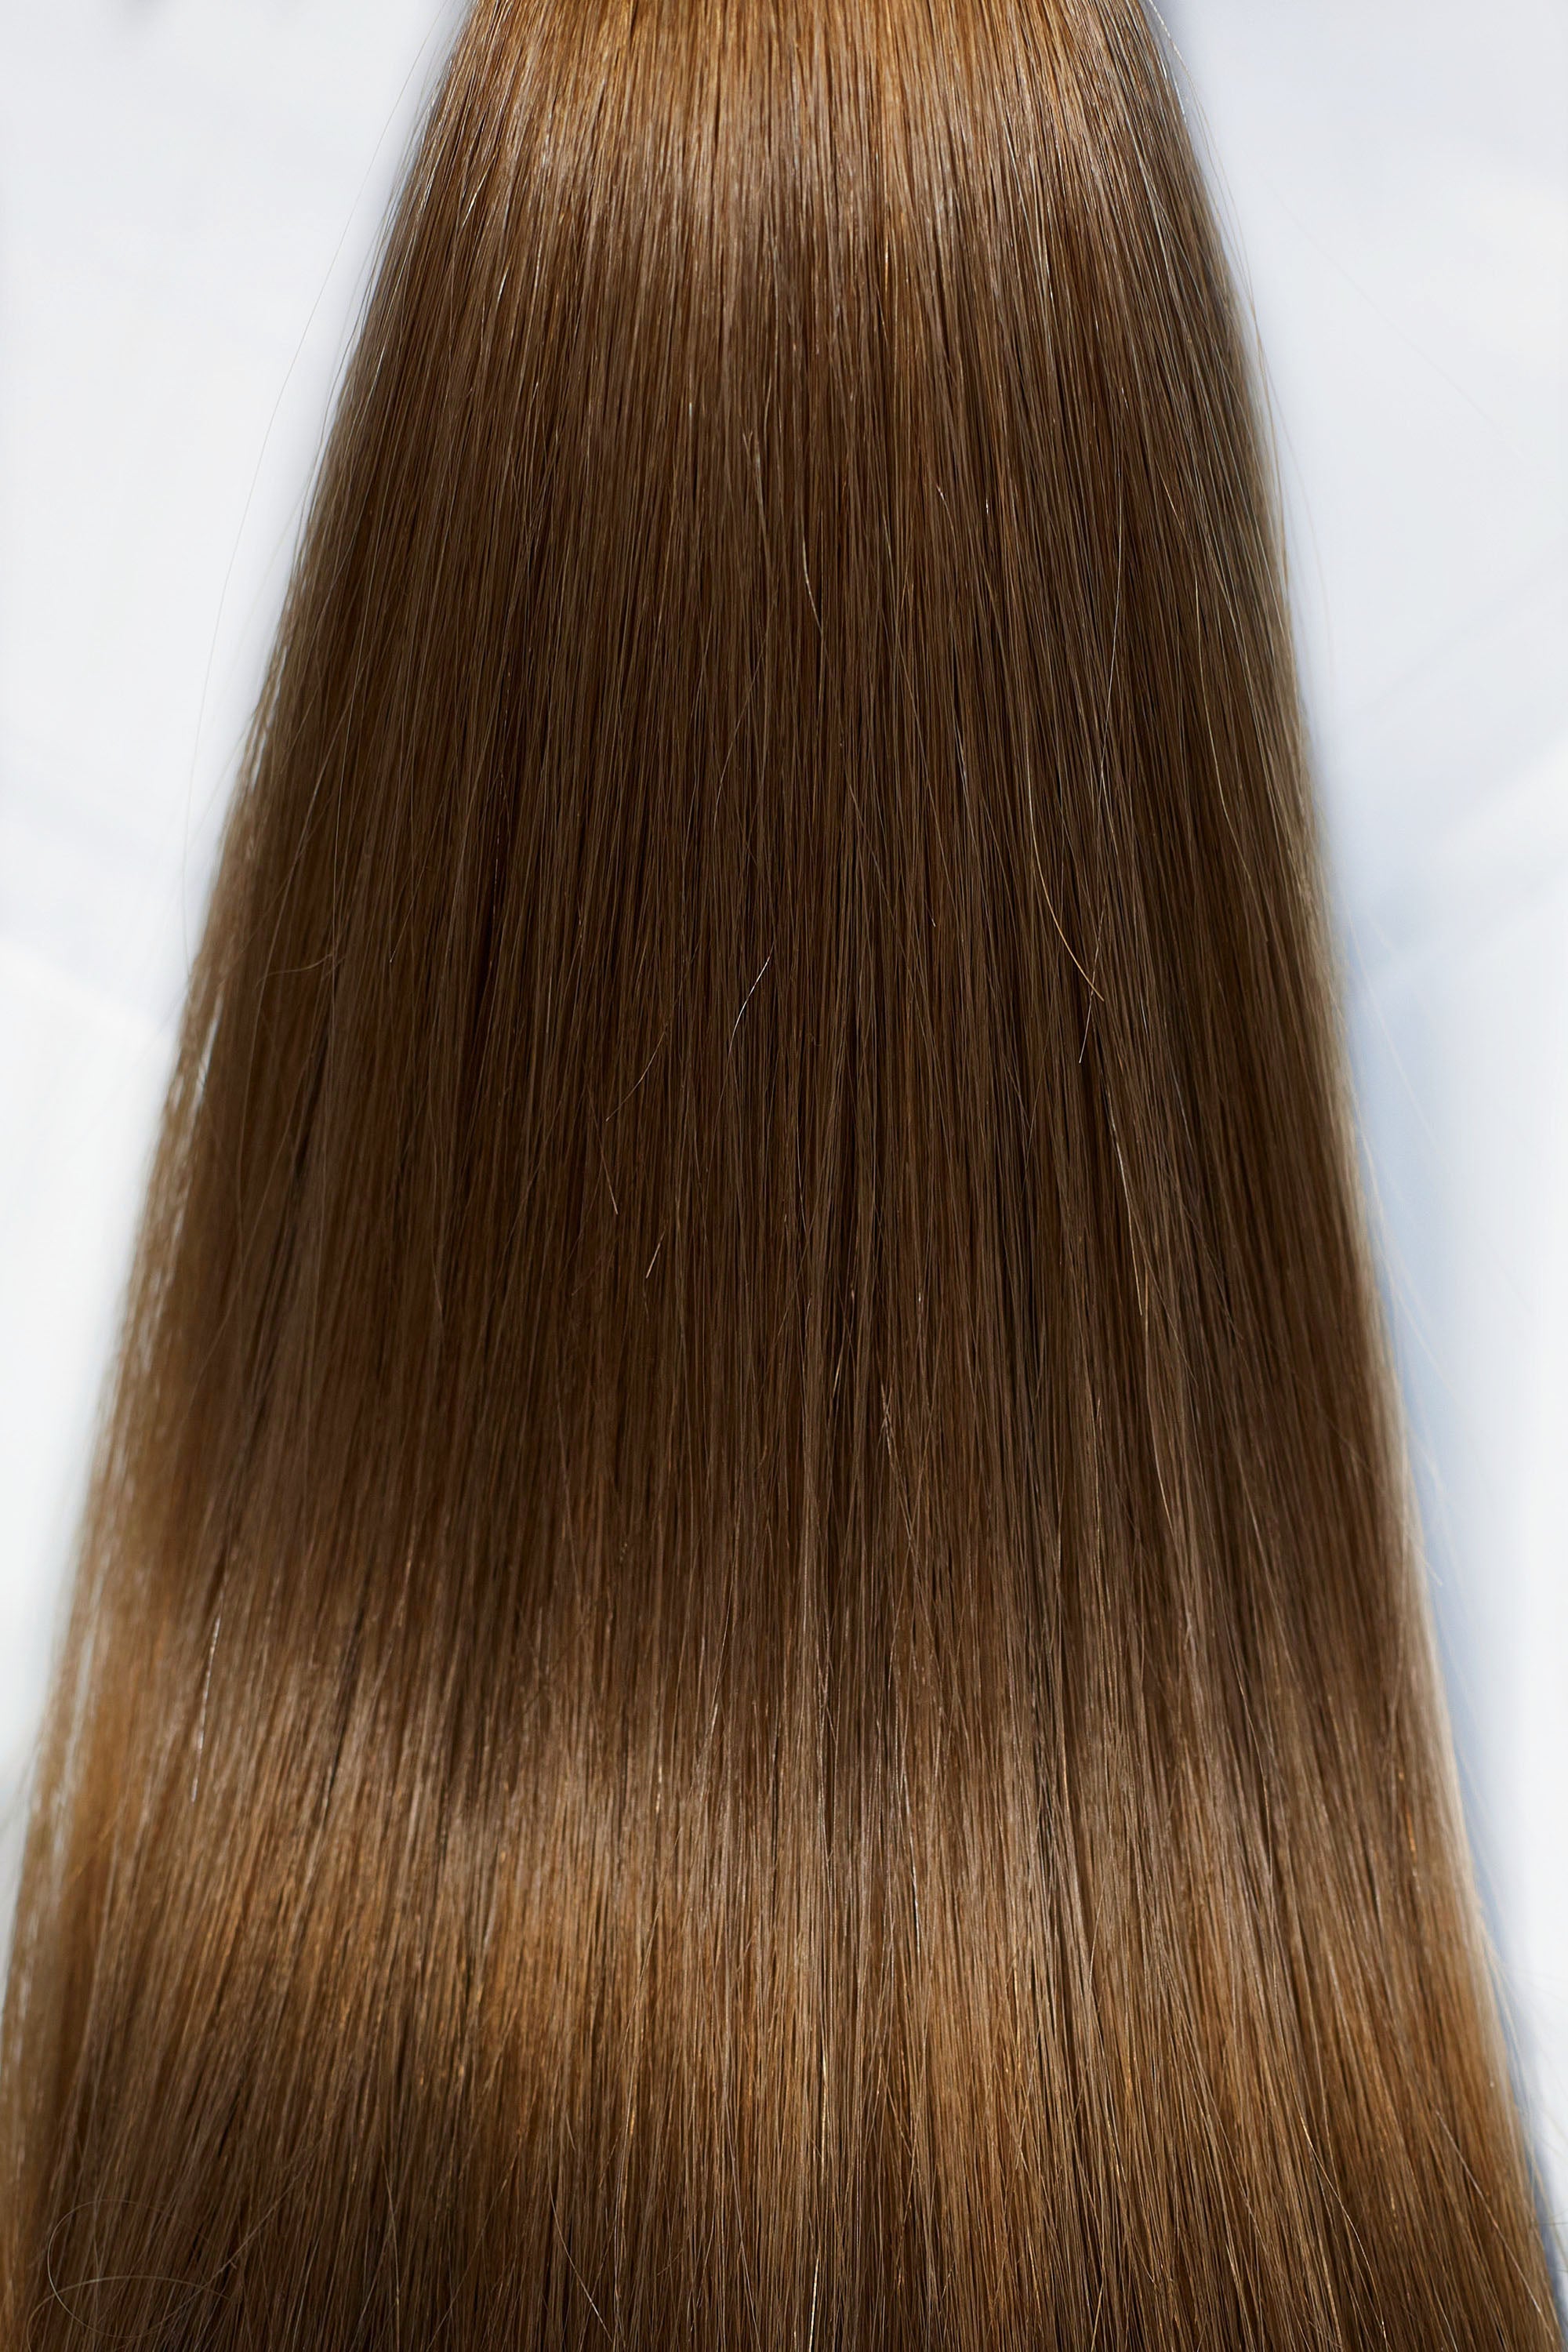 Behair professional Keratin Tip "Premium" 26" (65cm) Natural Straight Chestnut #6 - 25g (1g each pcs) hair extensions